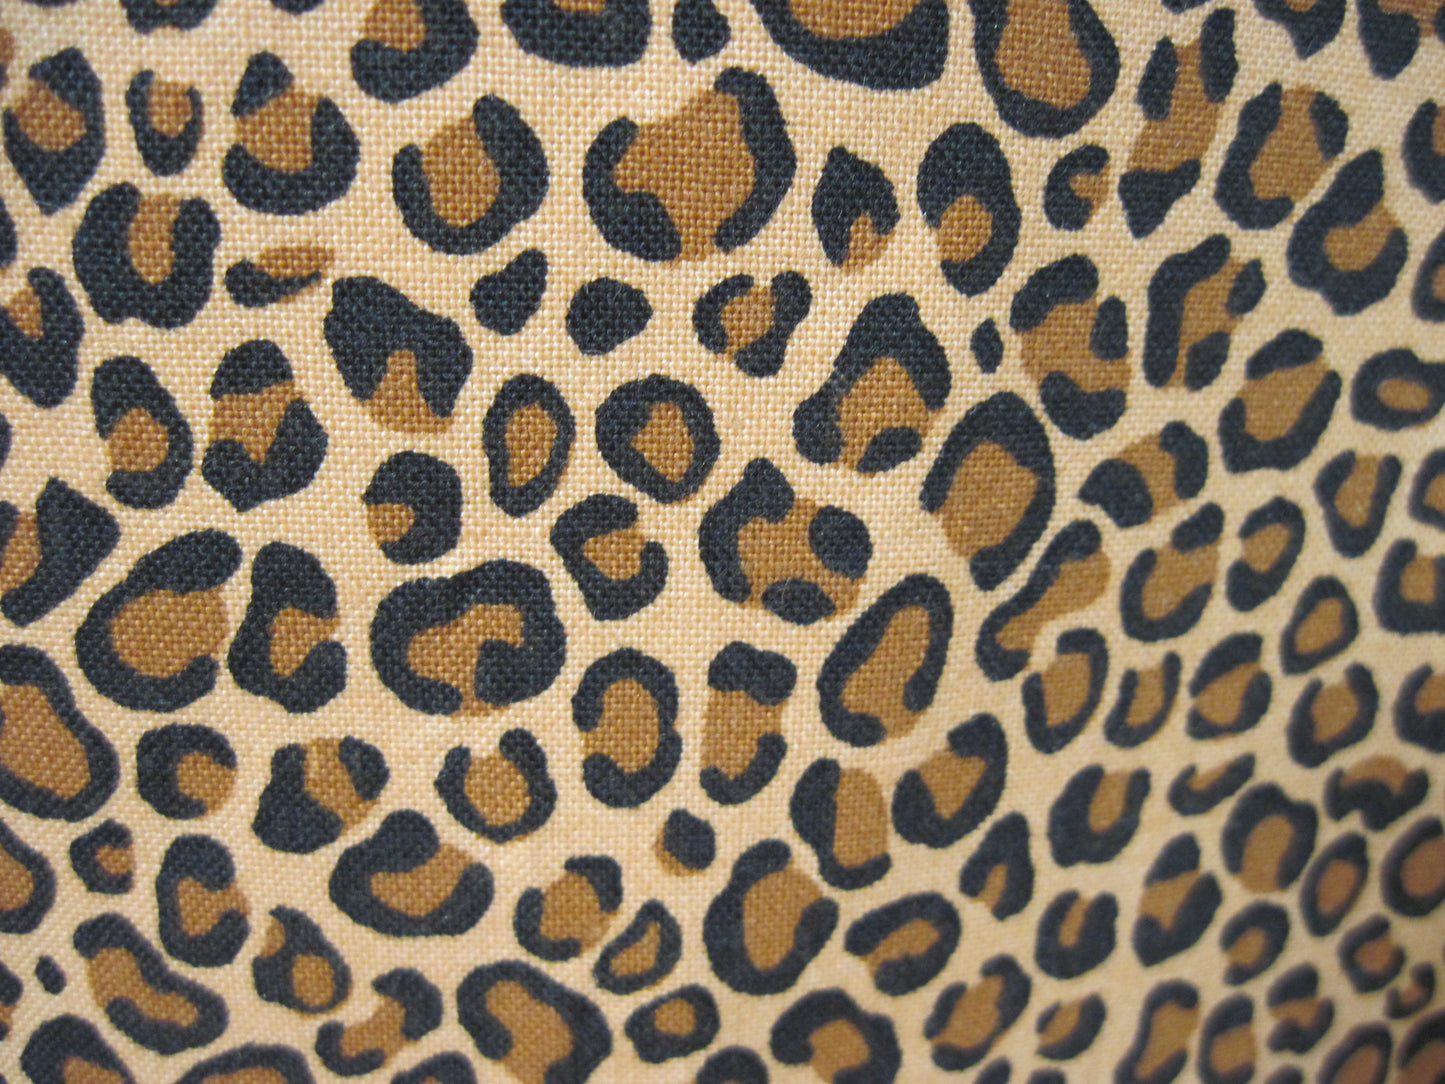 X-Large Tote Style bag~ Leopard w/ tan & sewn handles